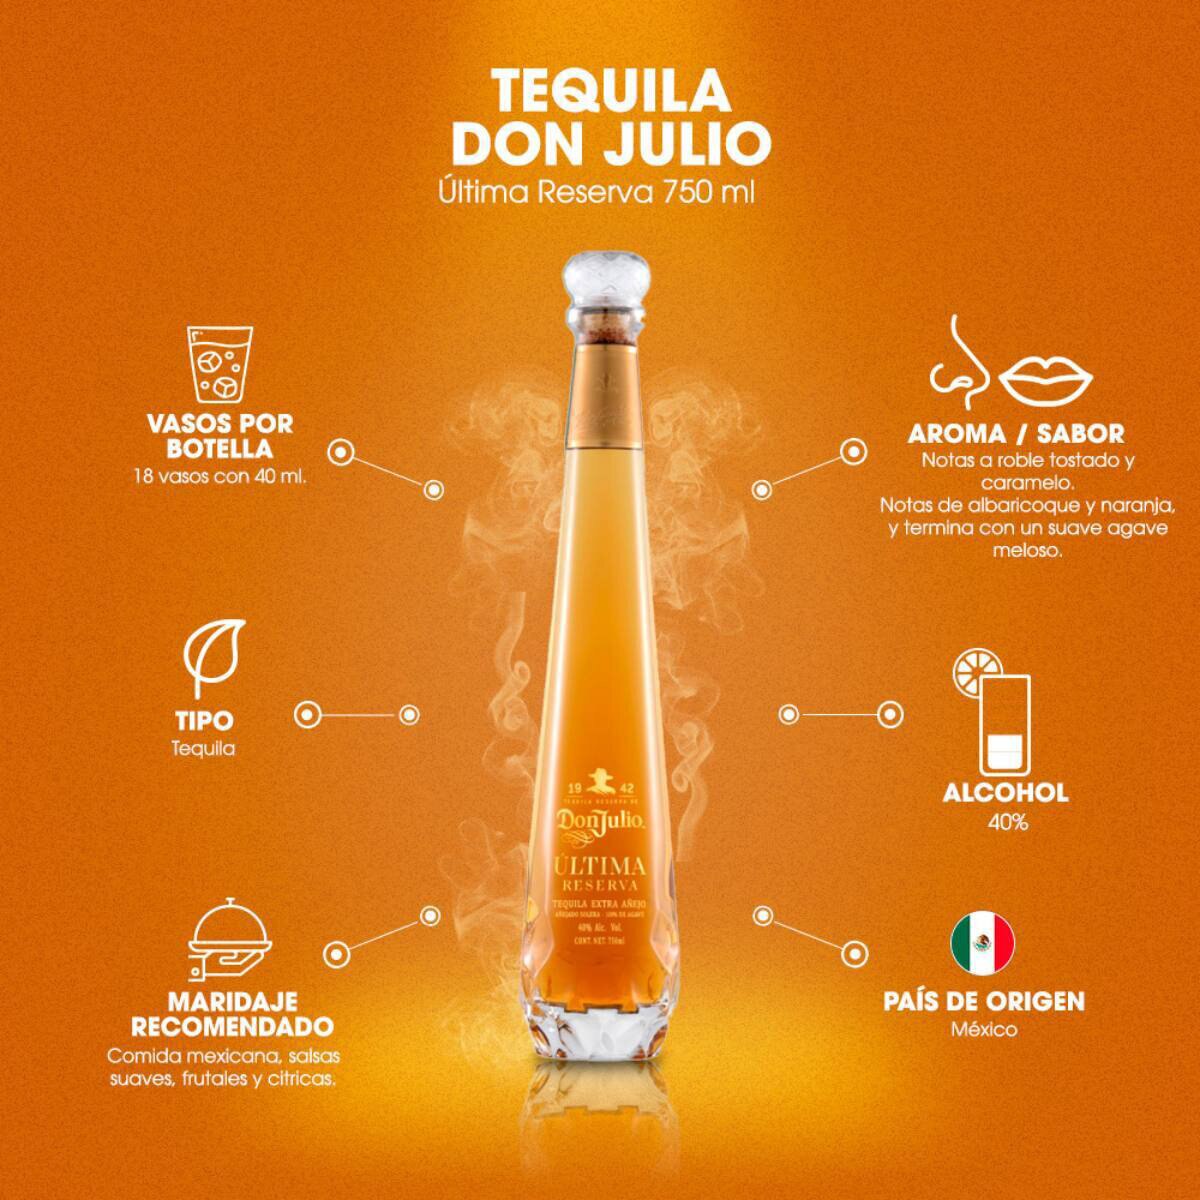 Tequila Don Julio Última Reserva 750ml